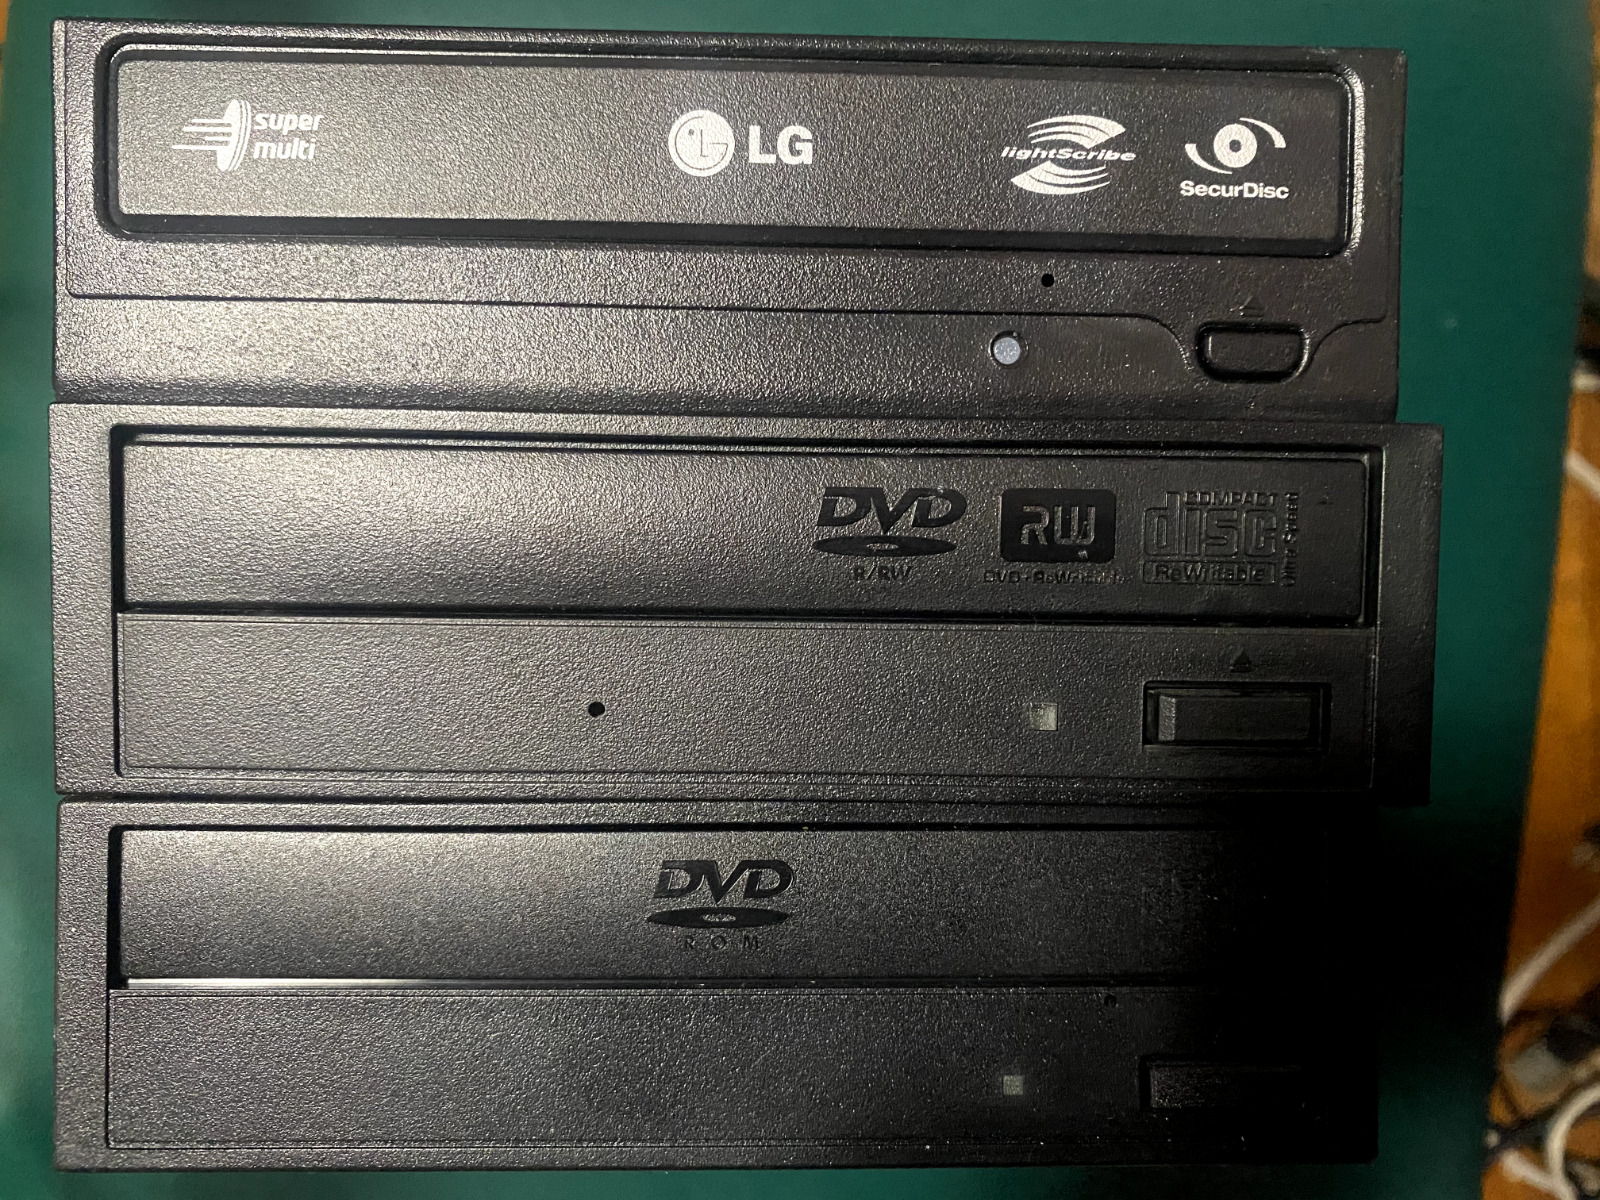 Lot of 3 Internal Desktop DVD Writer/DVD-ROM drives, GH22LS30, TS-H353, AD-5170S